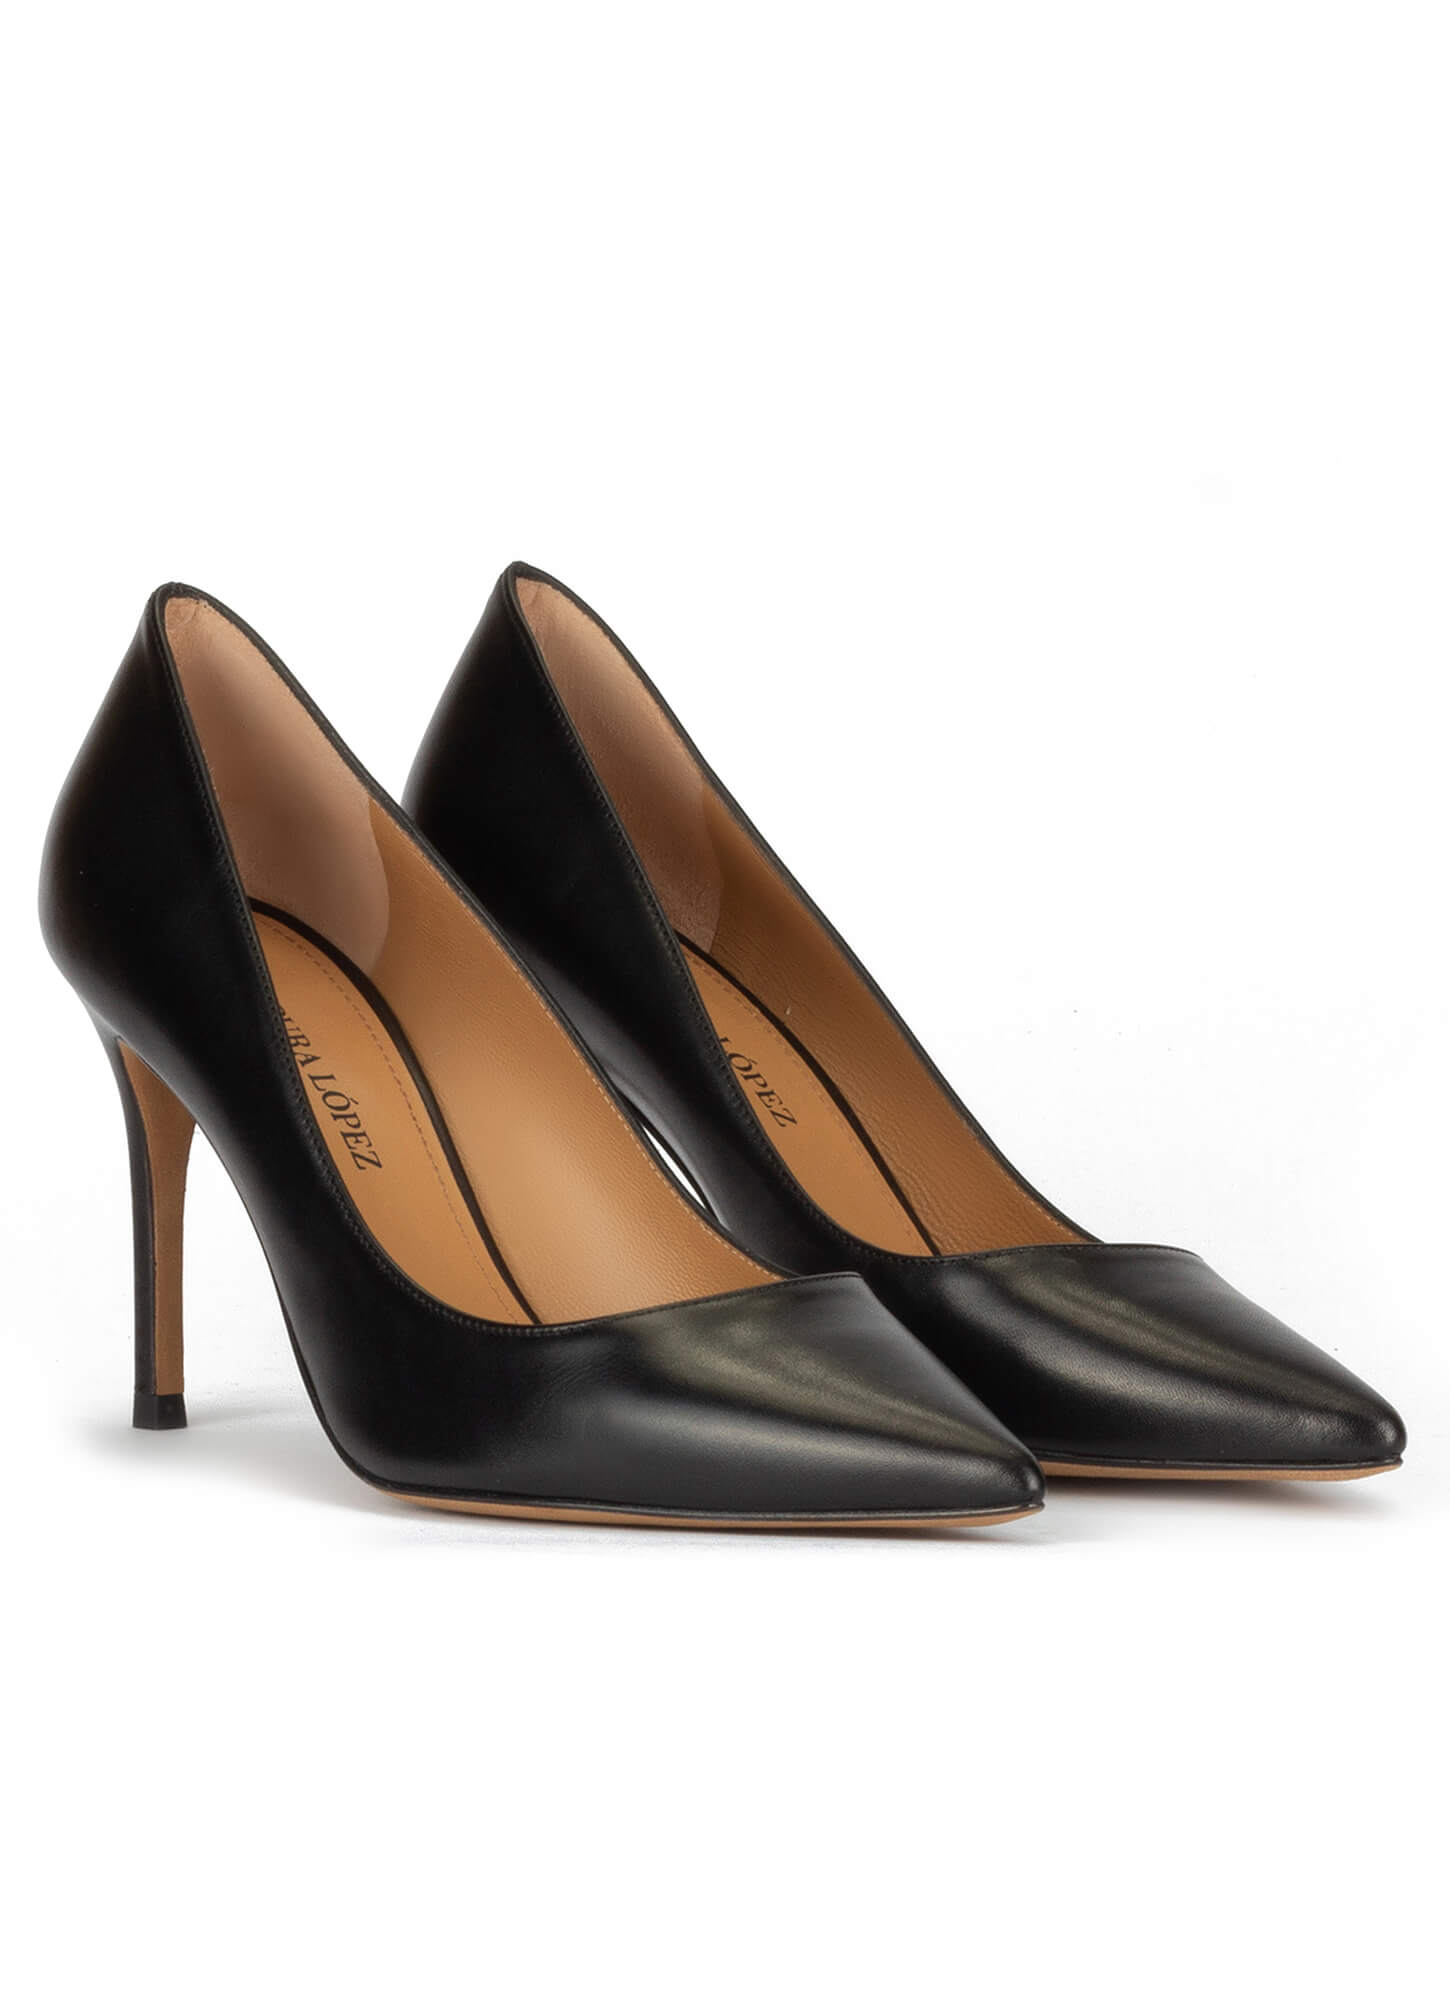 black leather stiletto heels